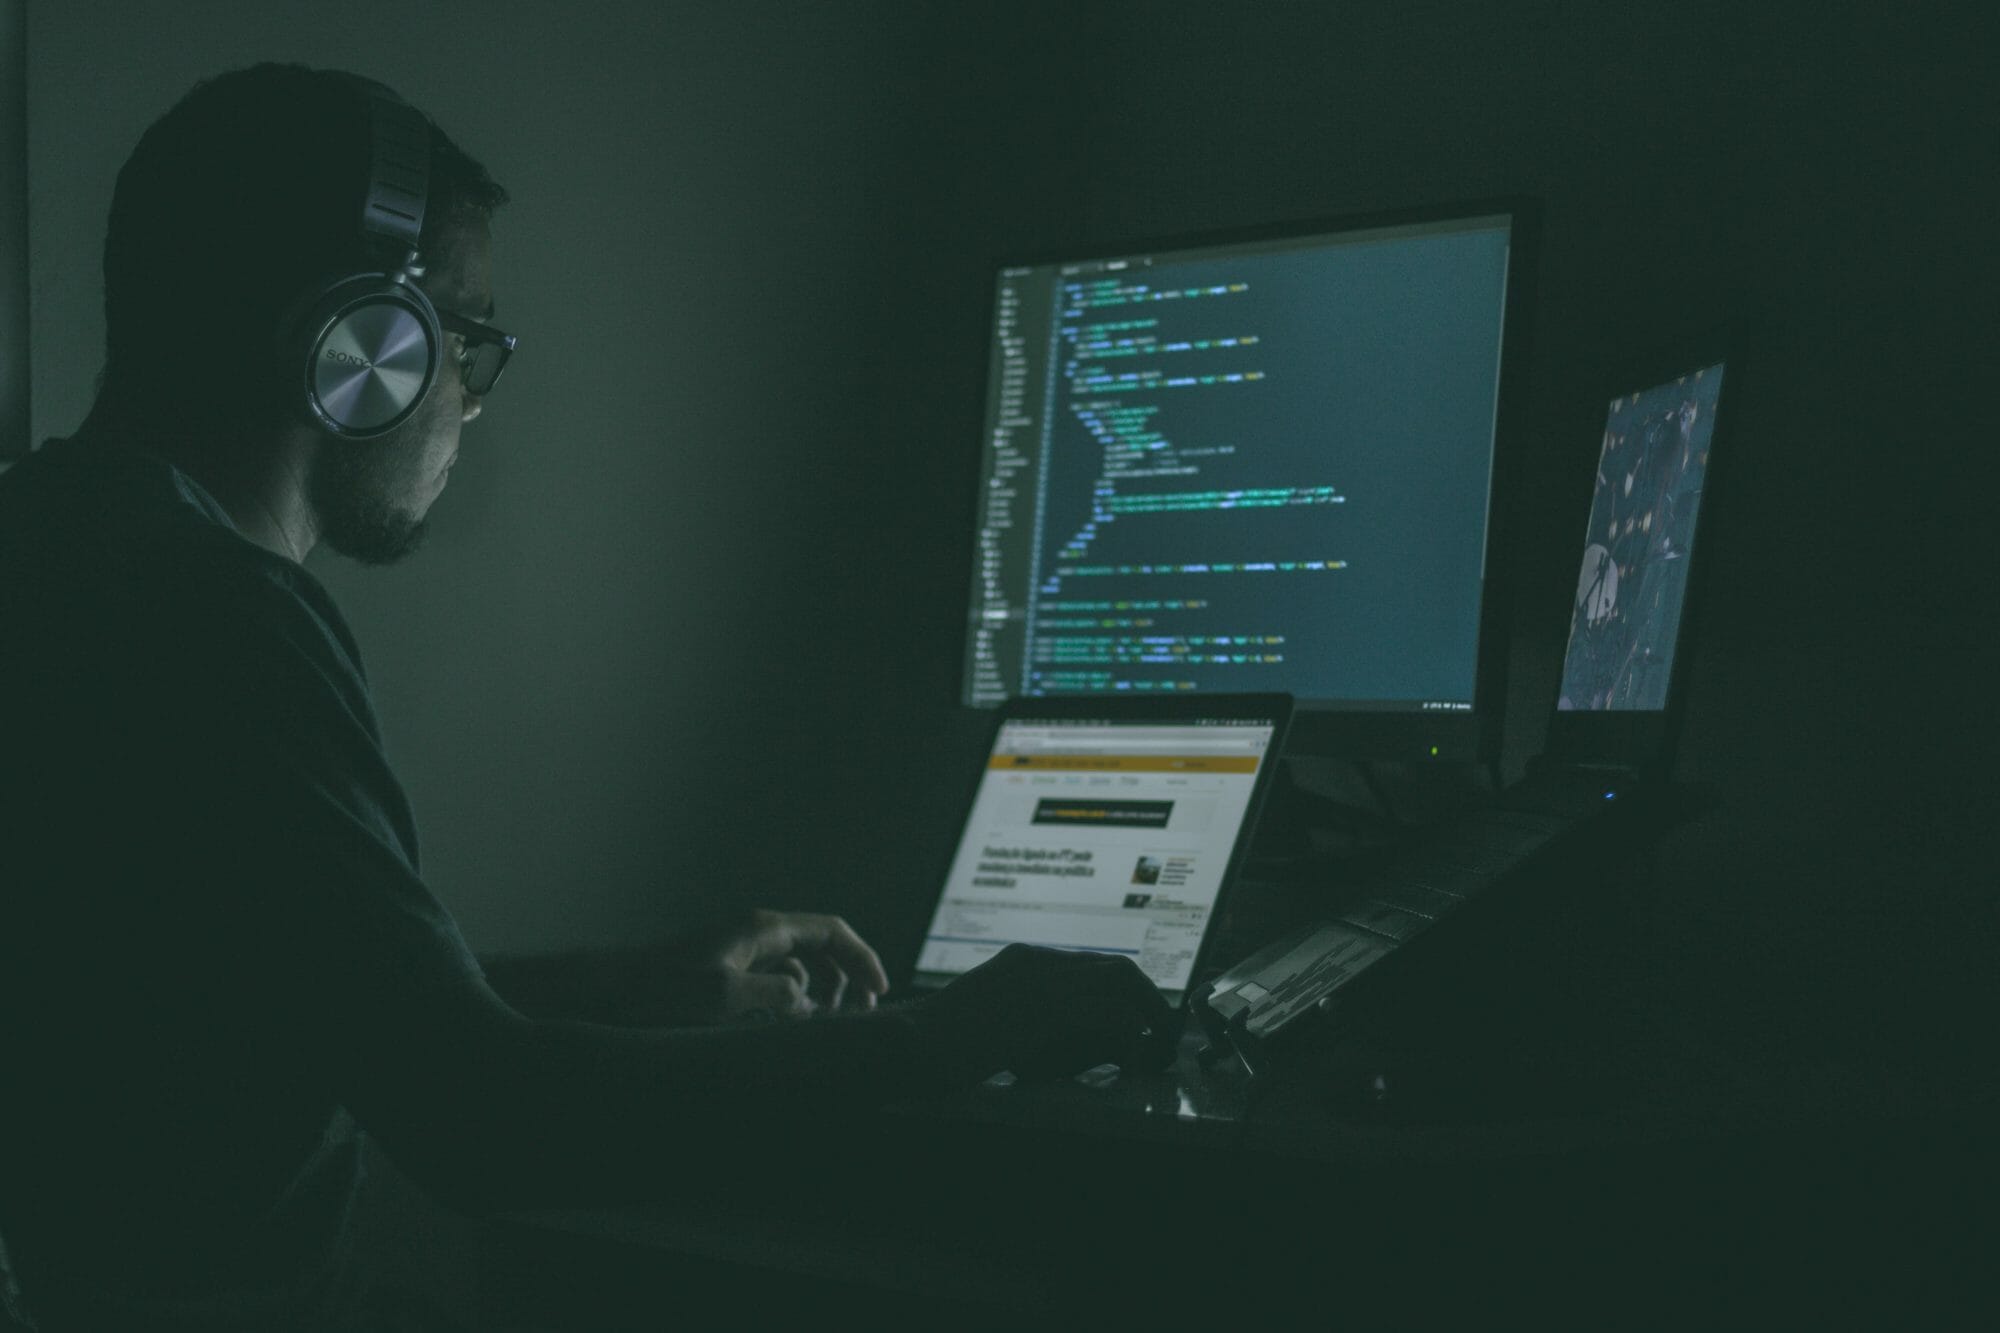 Hacker staring at computer screen in dark room